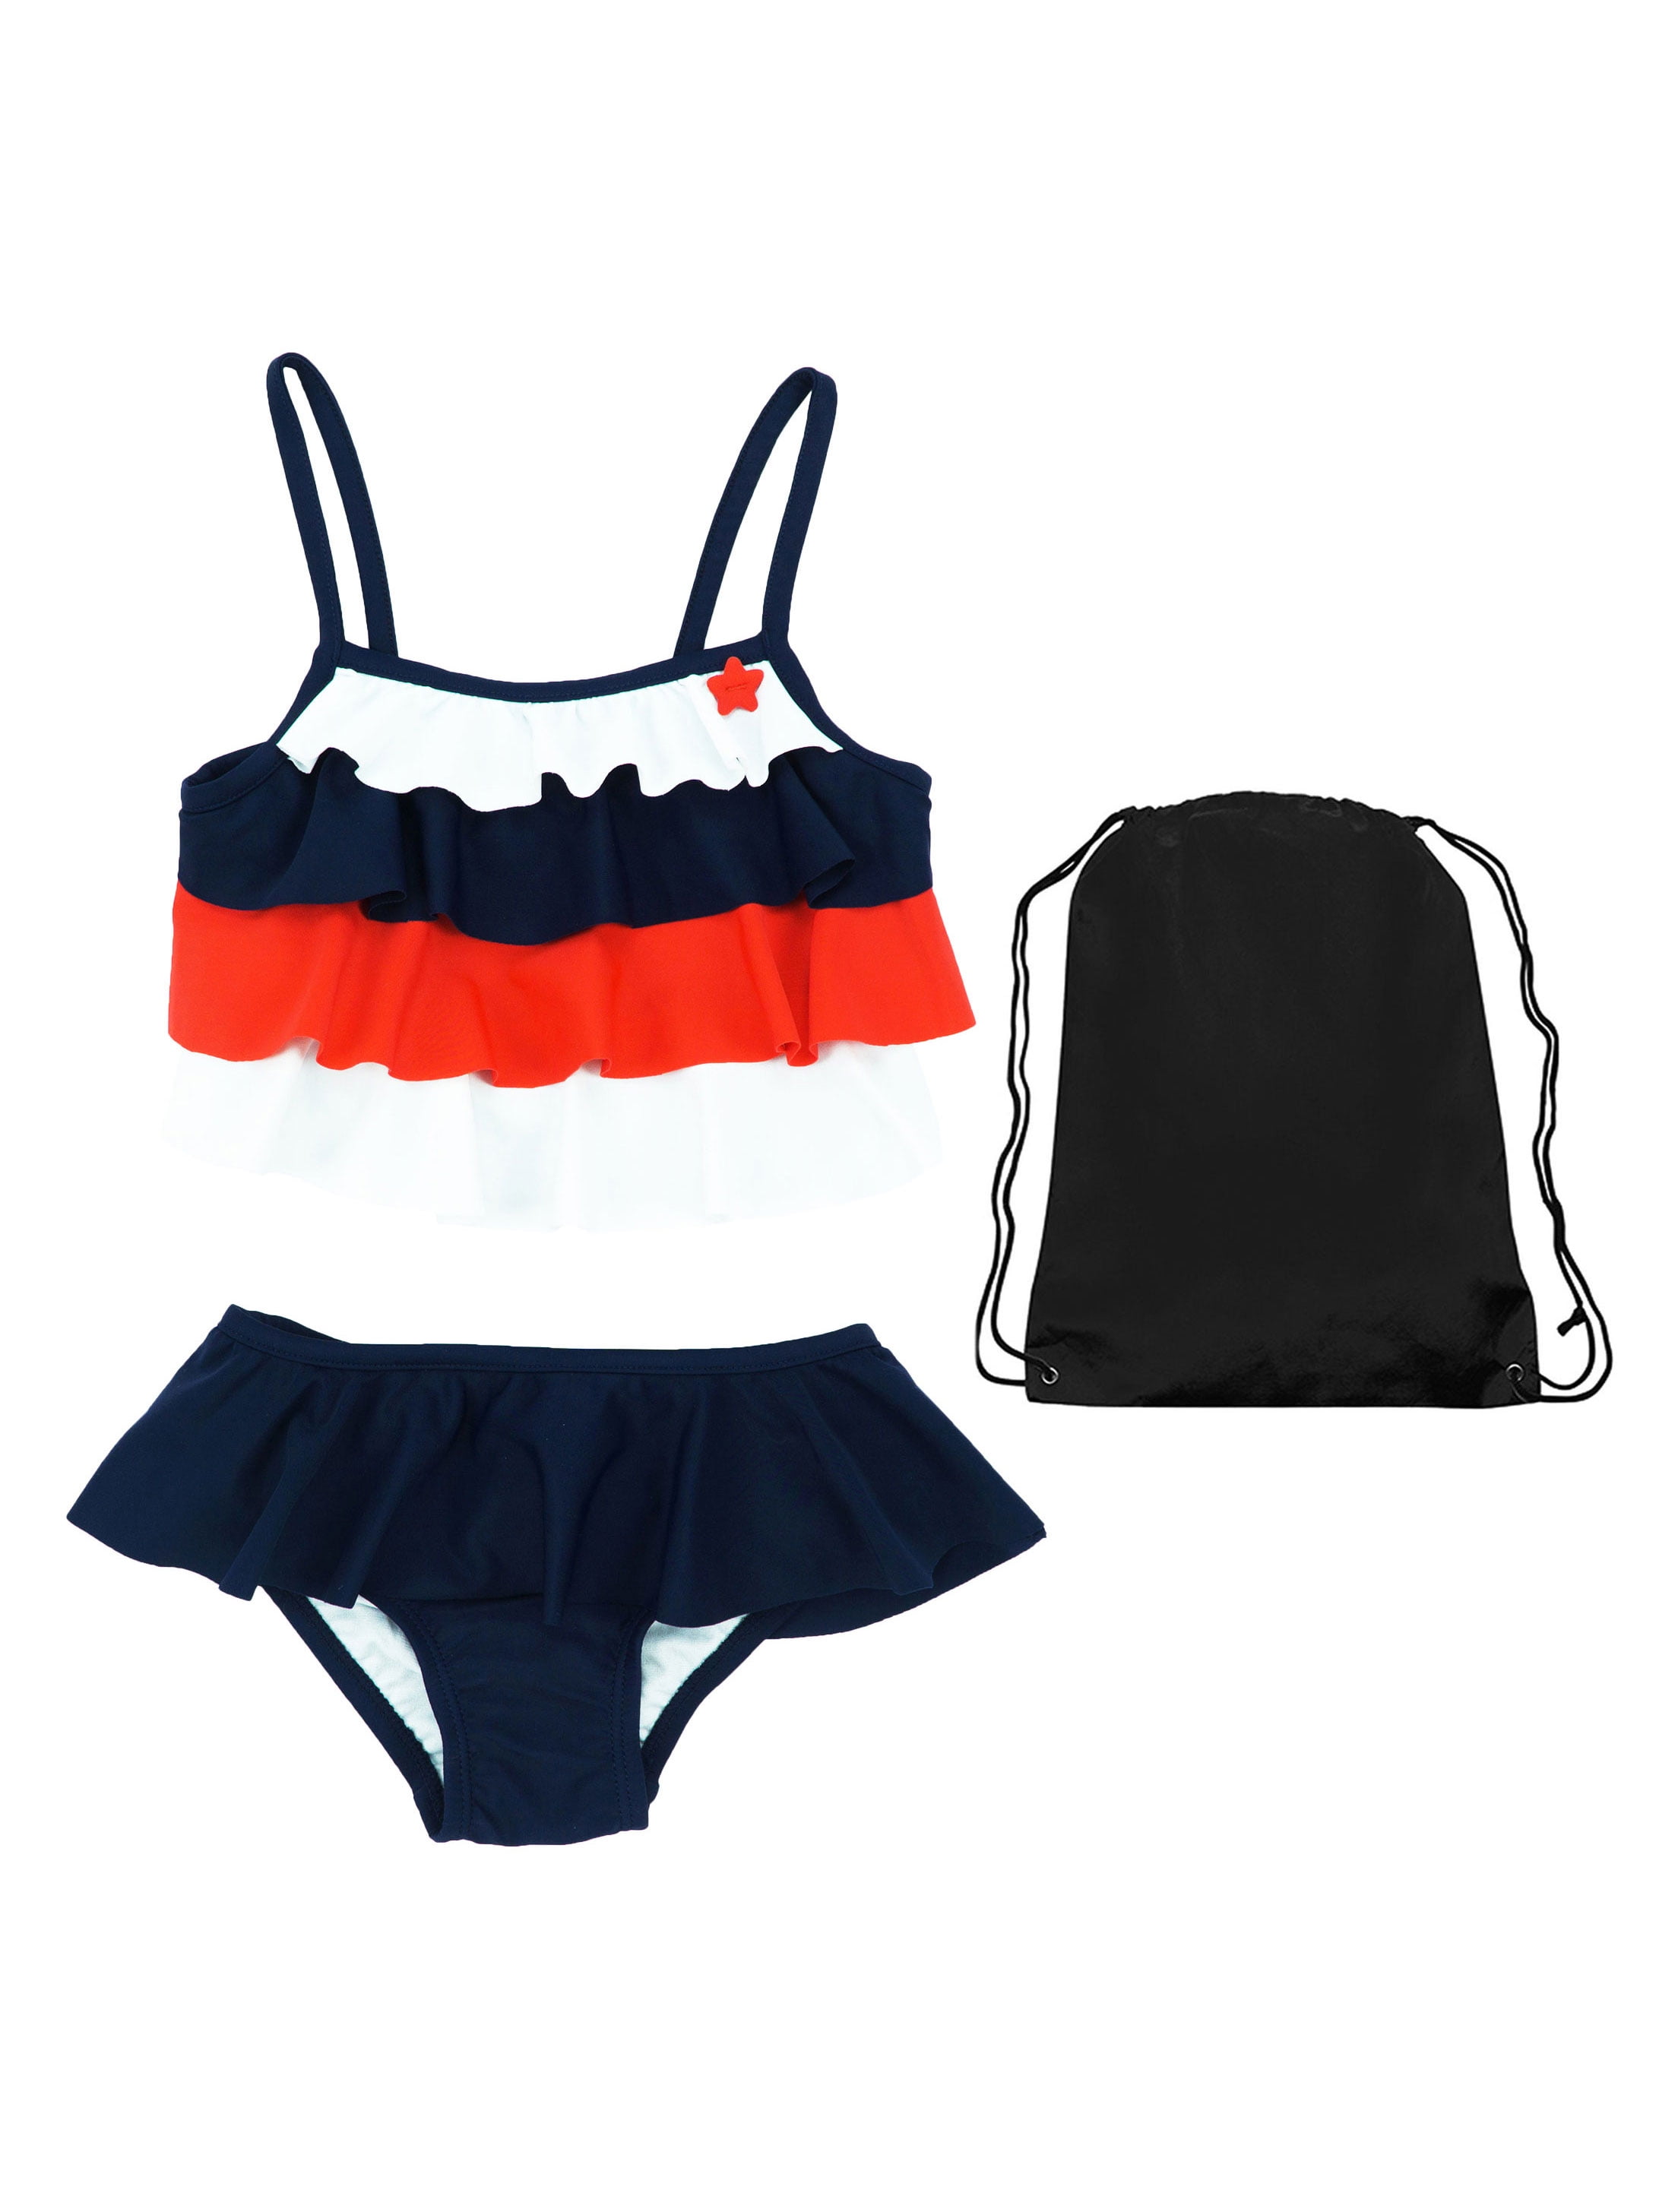 KIKO /& MAX Girls Baby Tankini 2-Piece Swimsuit Bathingsuit